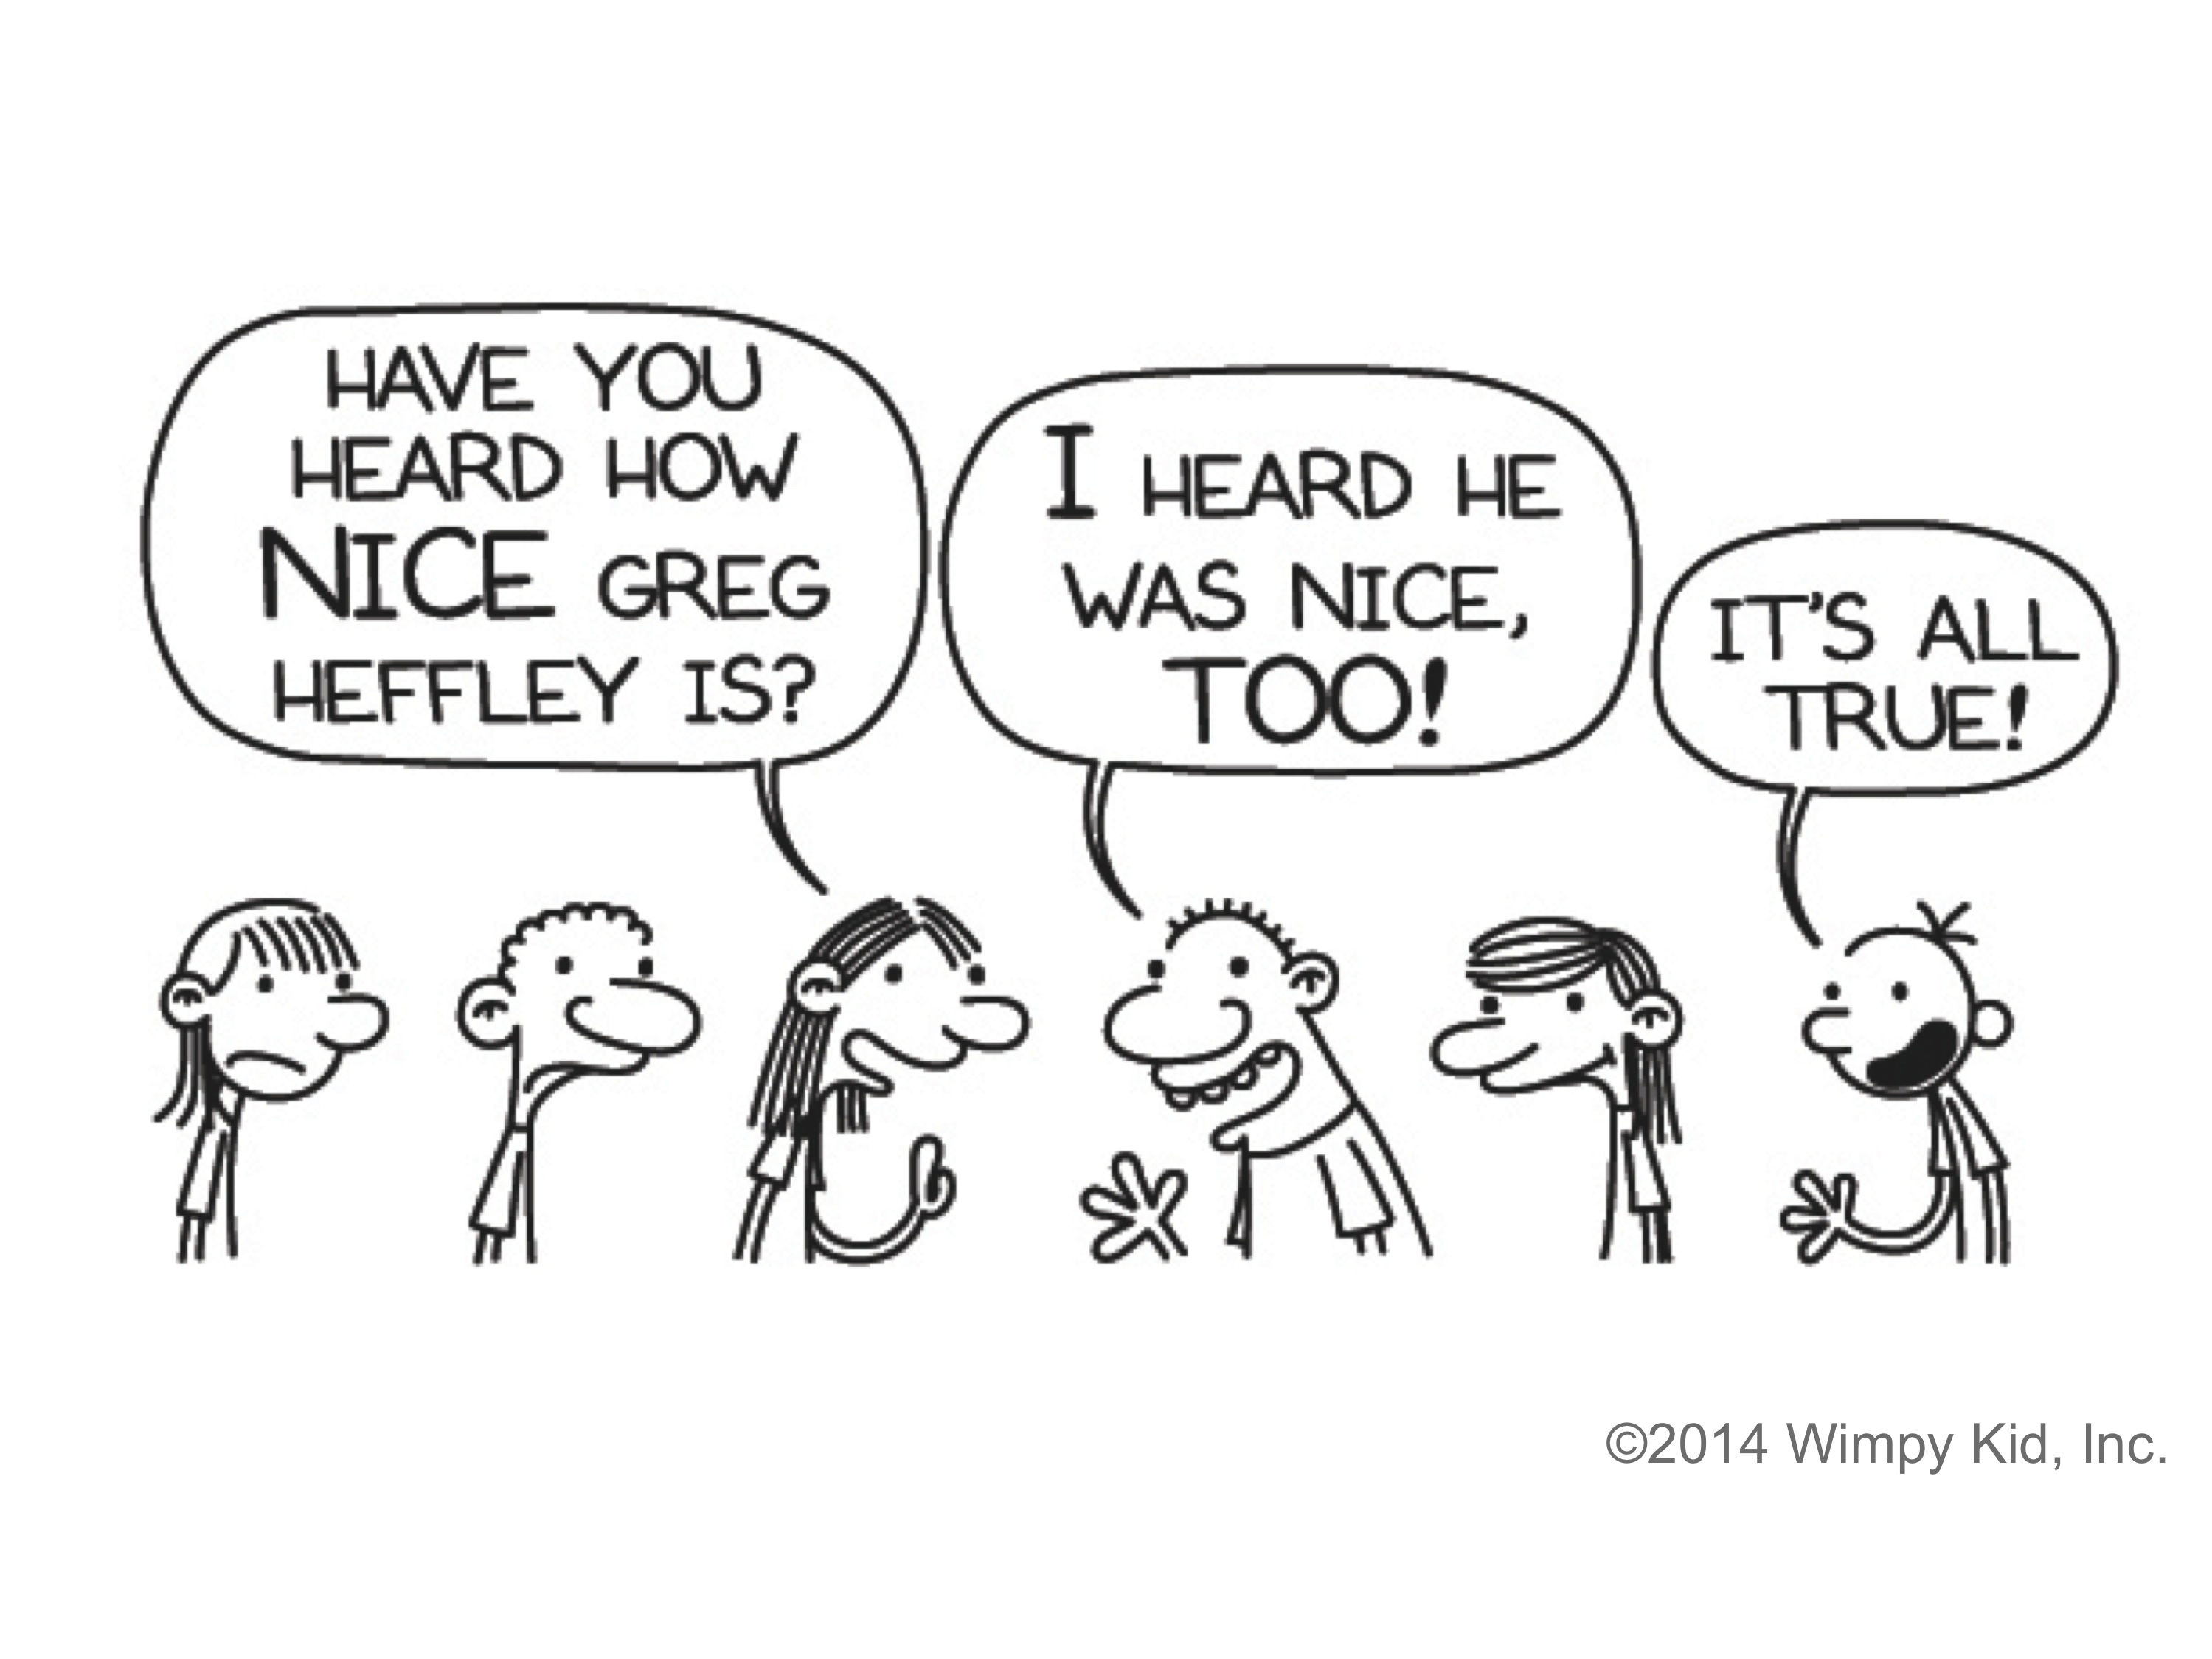 Will Greg Heffley Ever Grow Up? “Wimpy Kid” Author Jeff Kinney